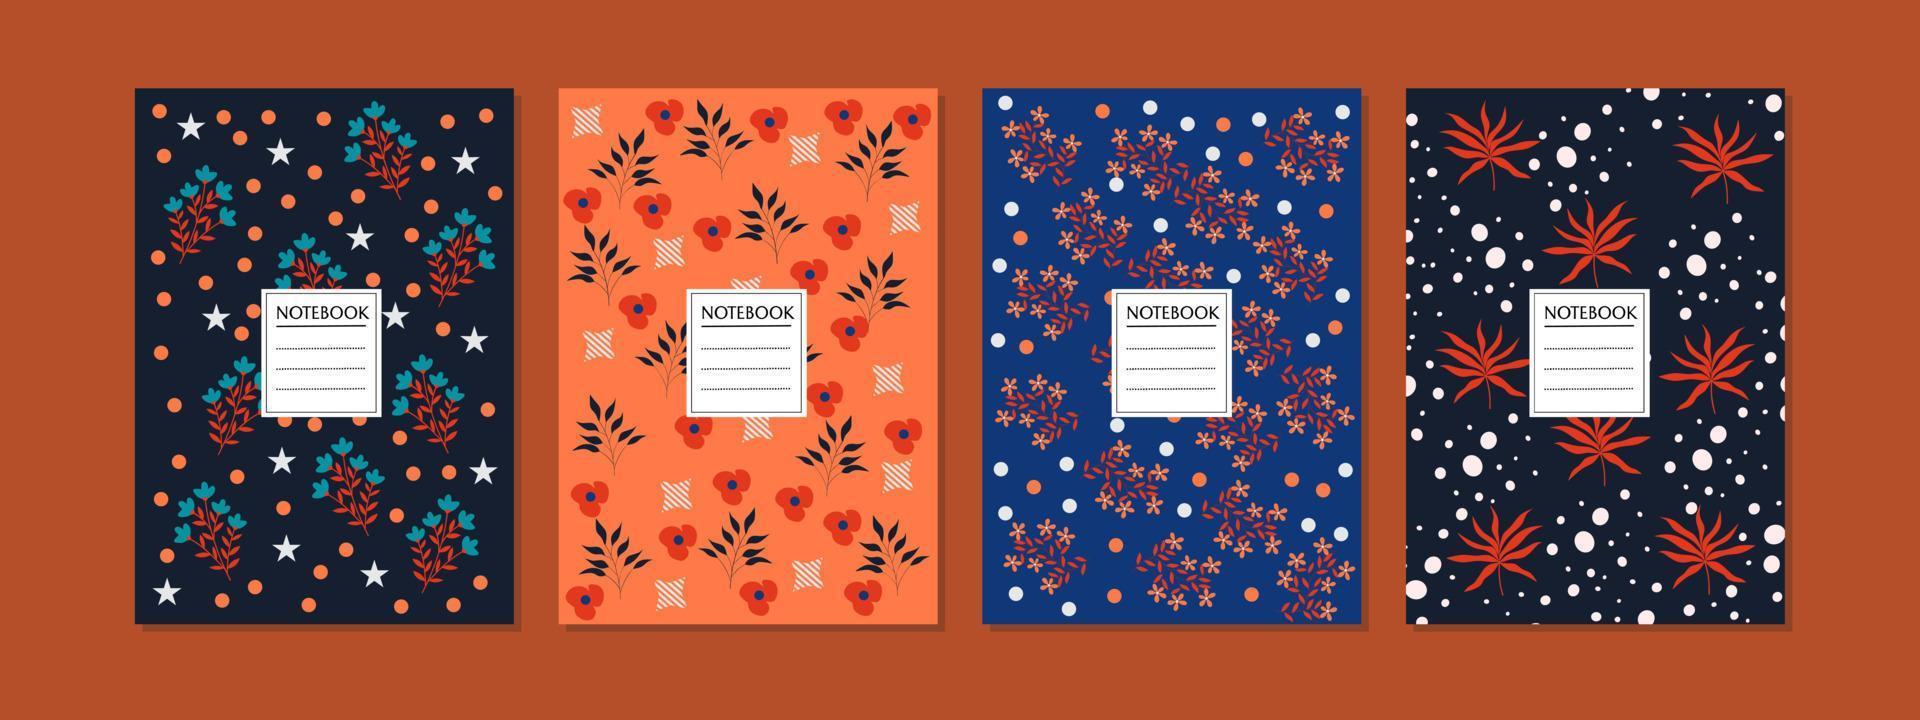 conjunto de portadas de libros con motivos florales dibujados a mano. fresco diseño abstracto y floral. para cuadernos, planificadores, folletos, libros, catálogos vector